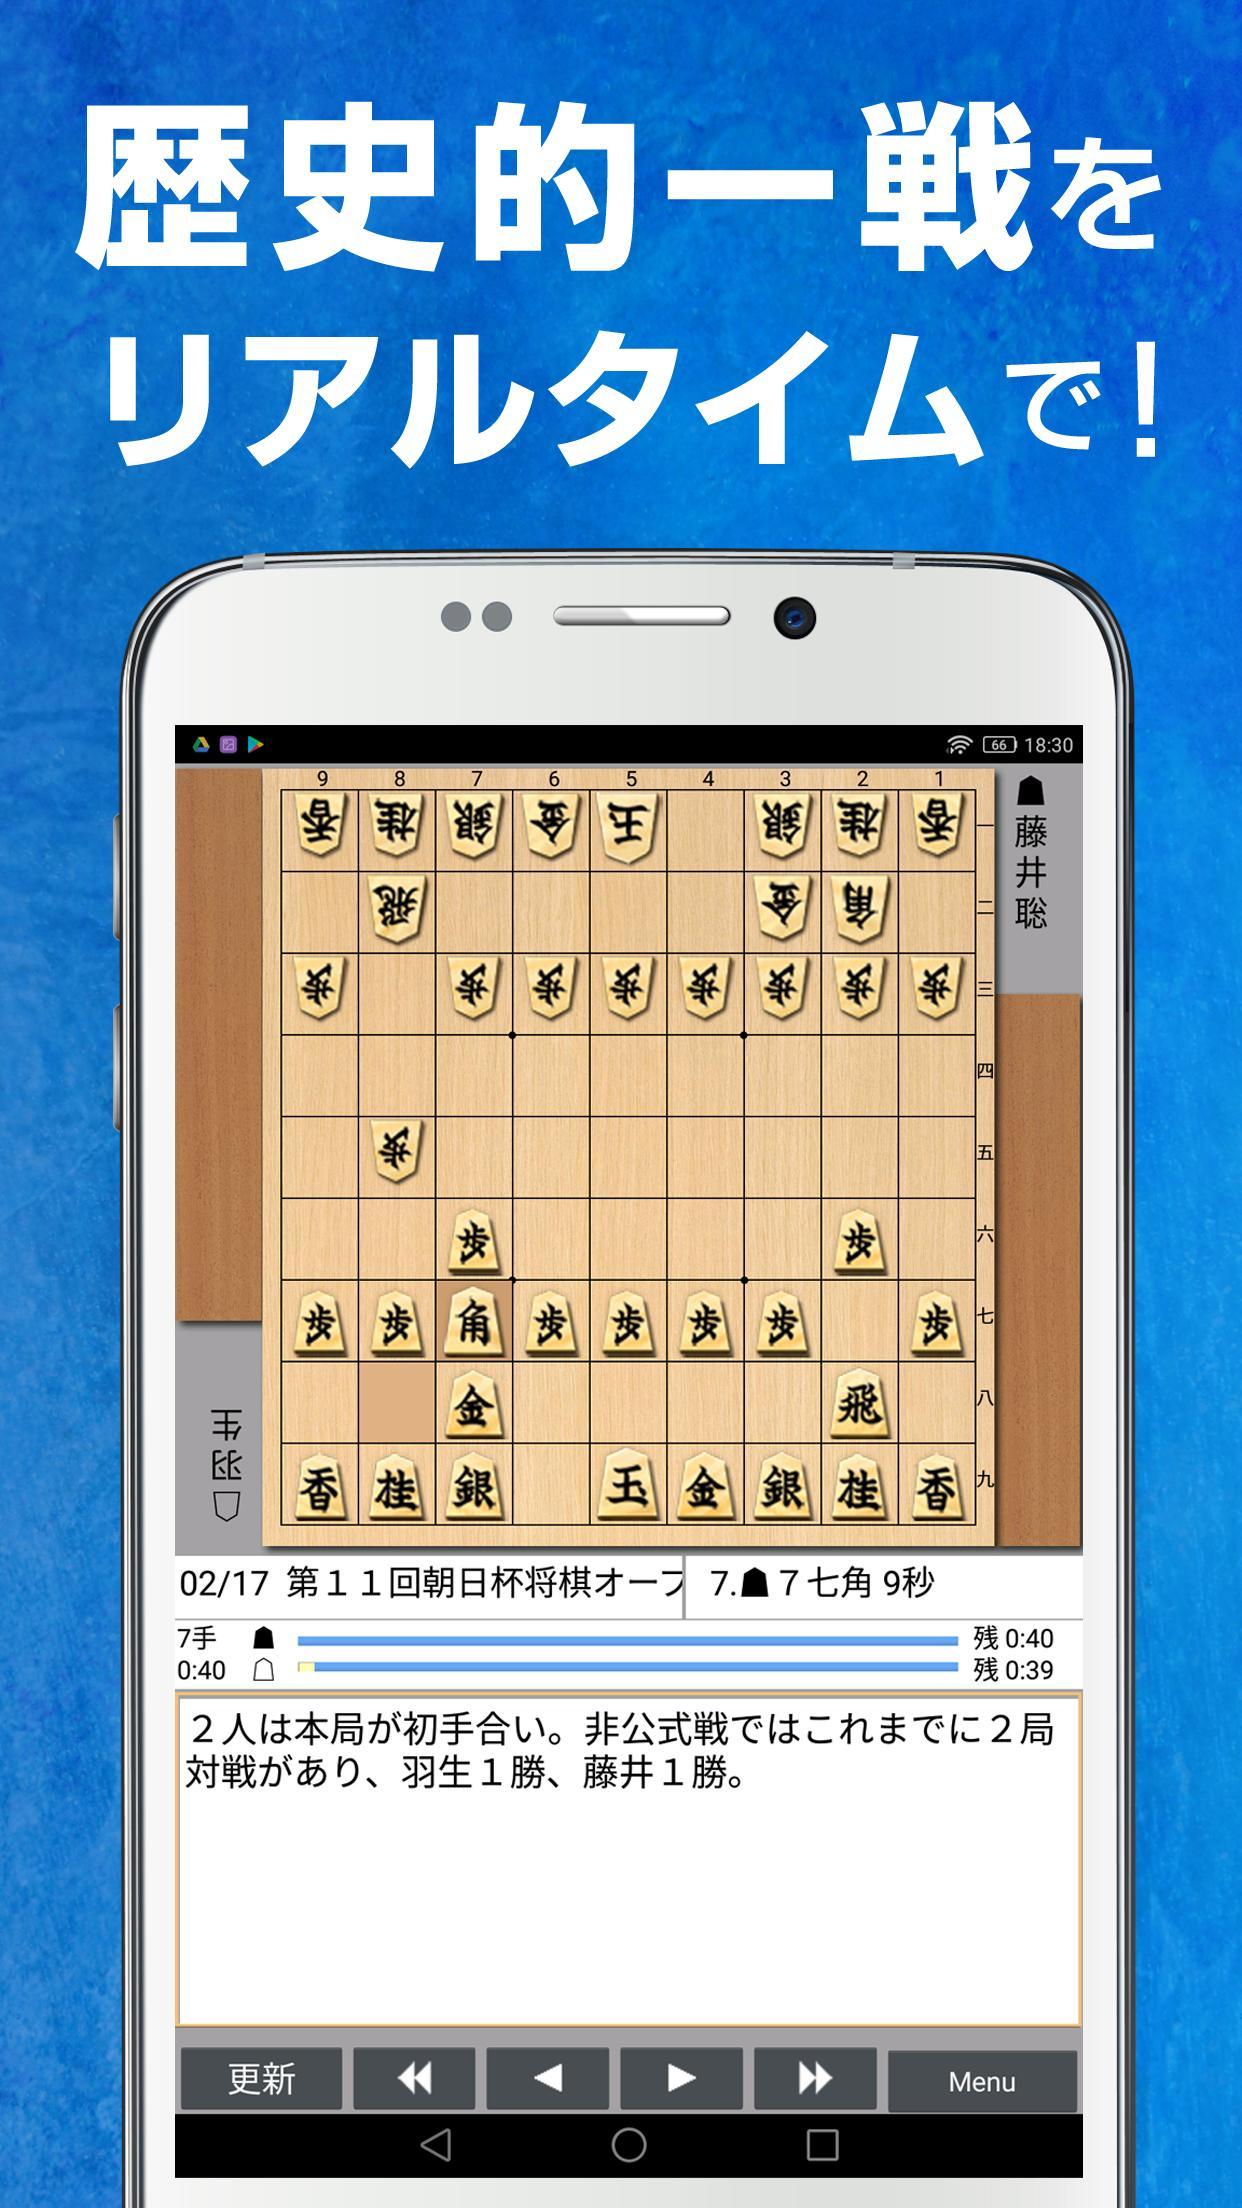 Shogi Live Subscription 2014 7.17 Screenshot 10